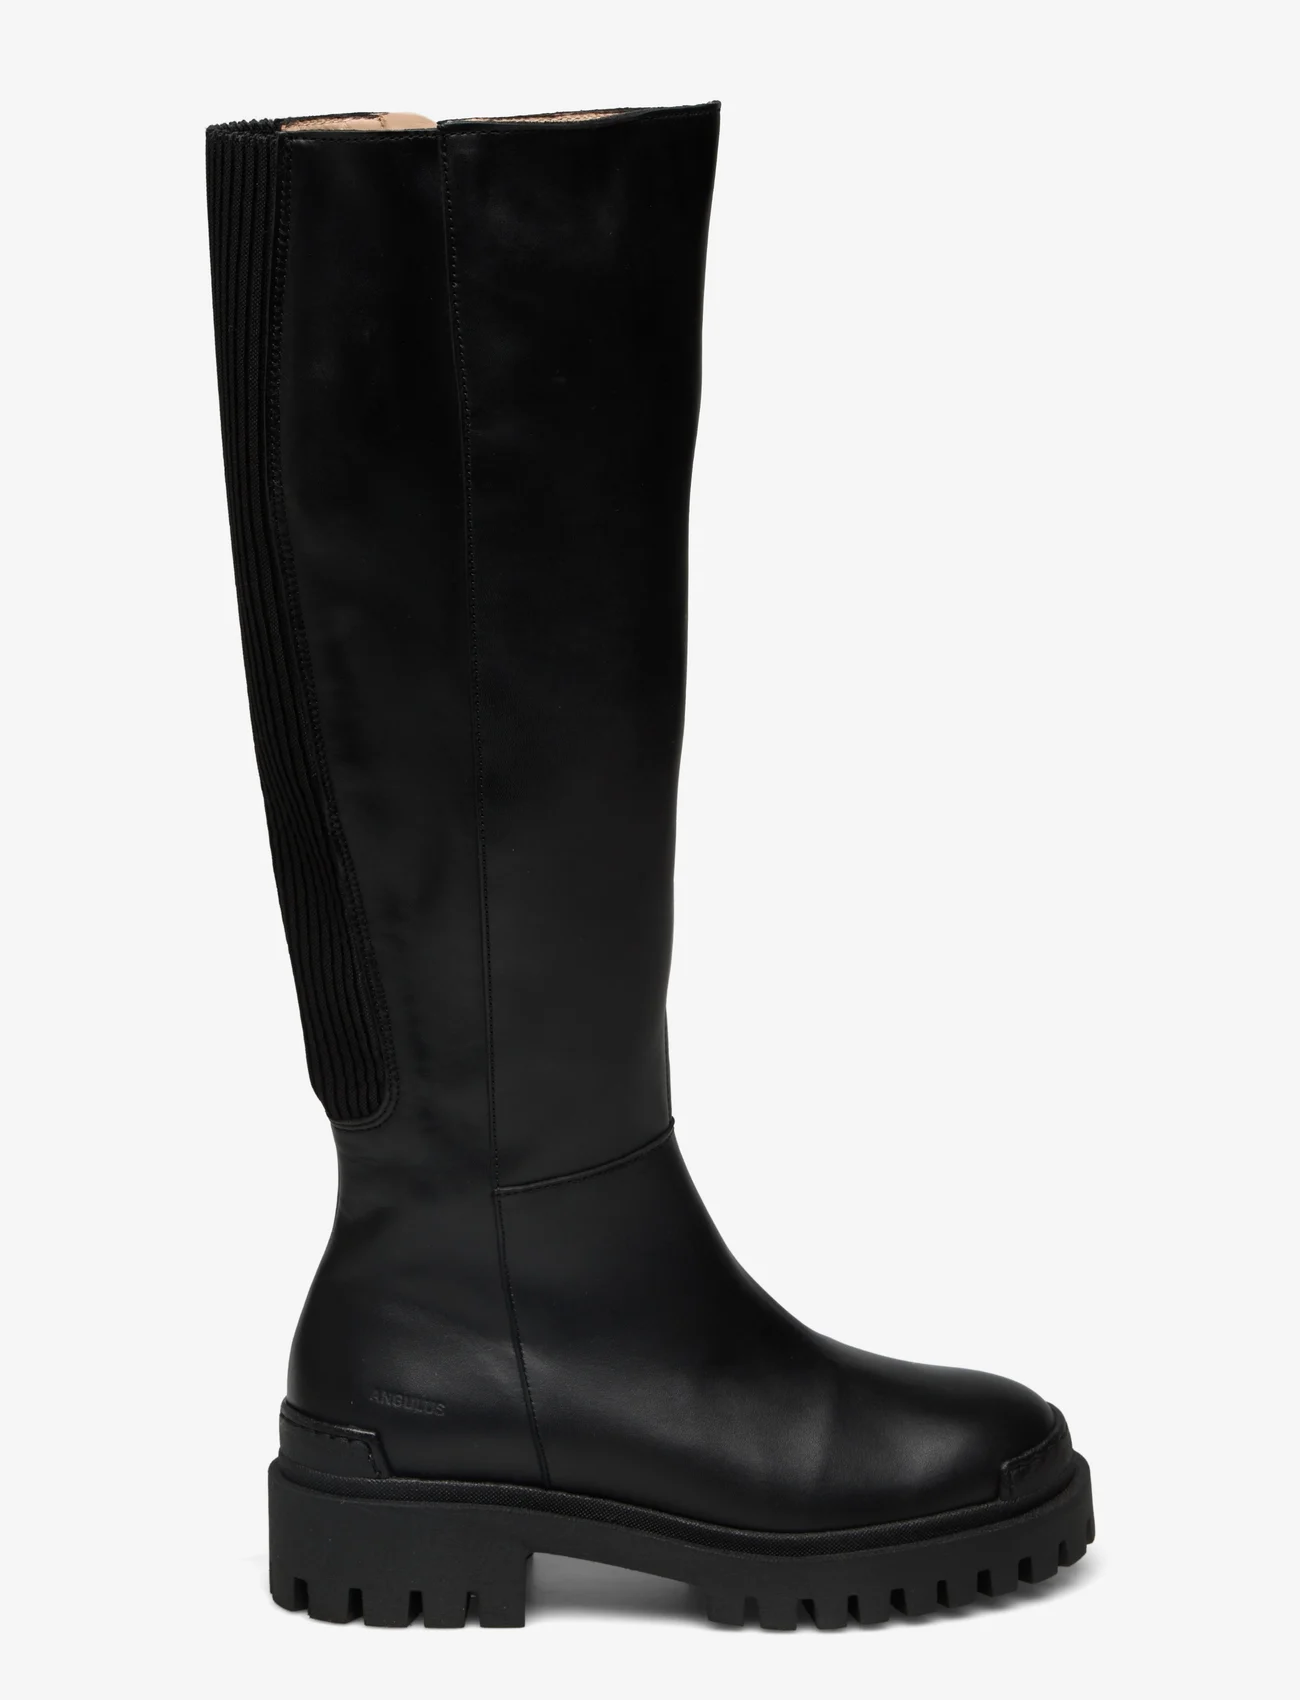 ANGULUS - Boots - flat - kniehohe stiefel - 1604/019 black/black - 1